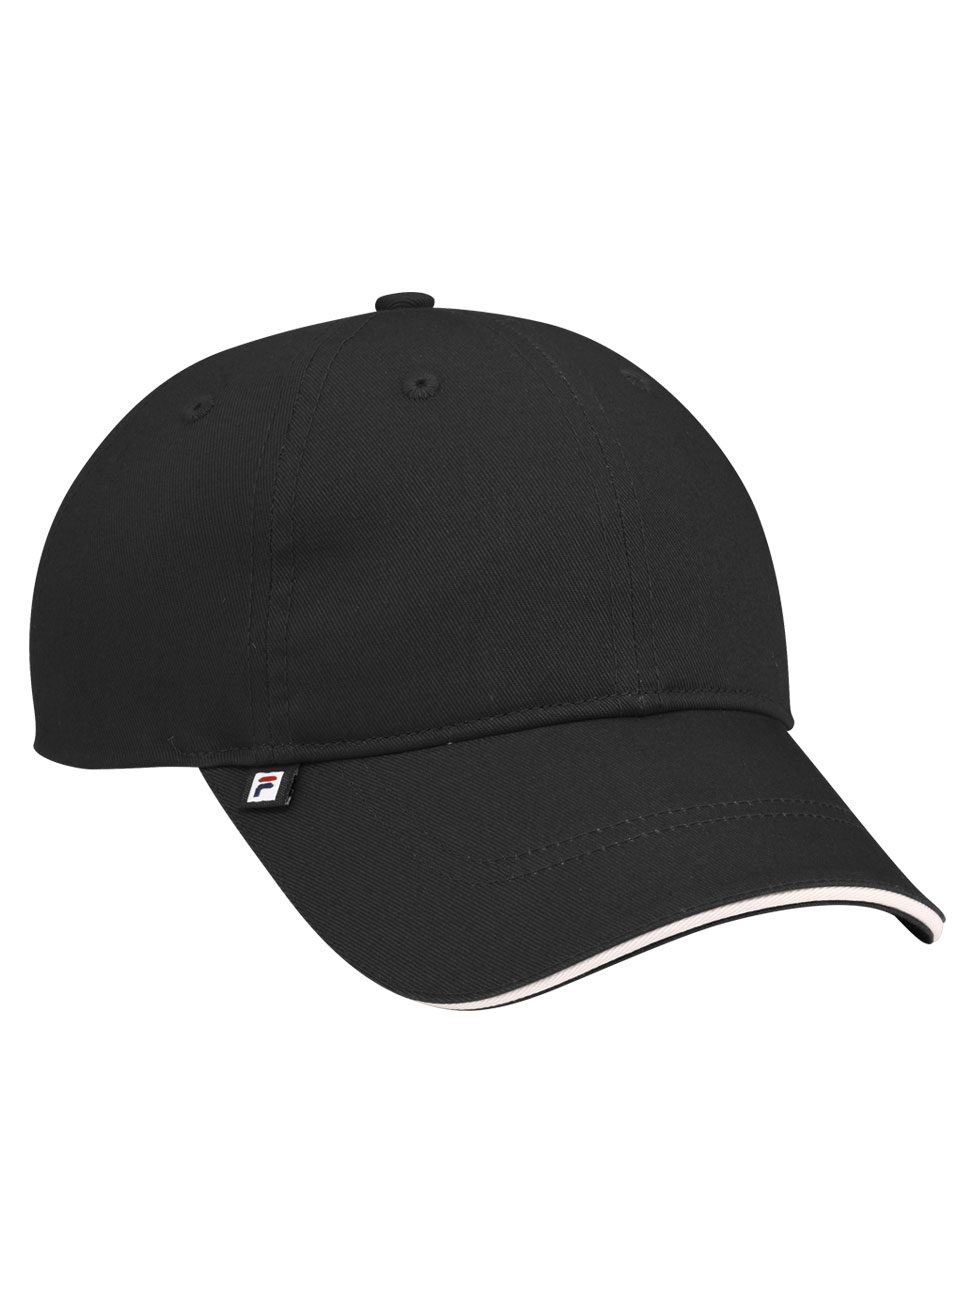 Fila Torino Baseball Hat #FA1010 Black